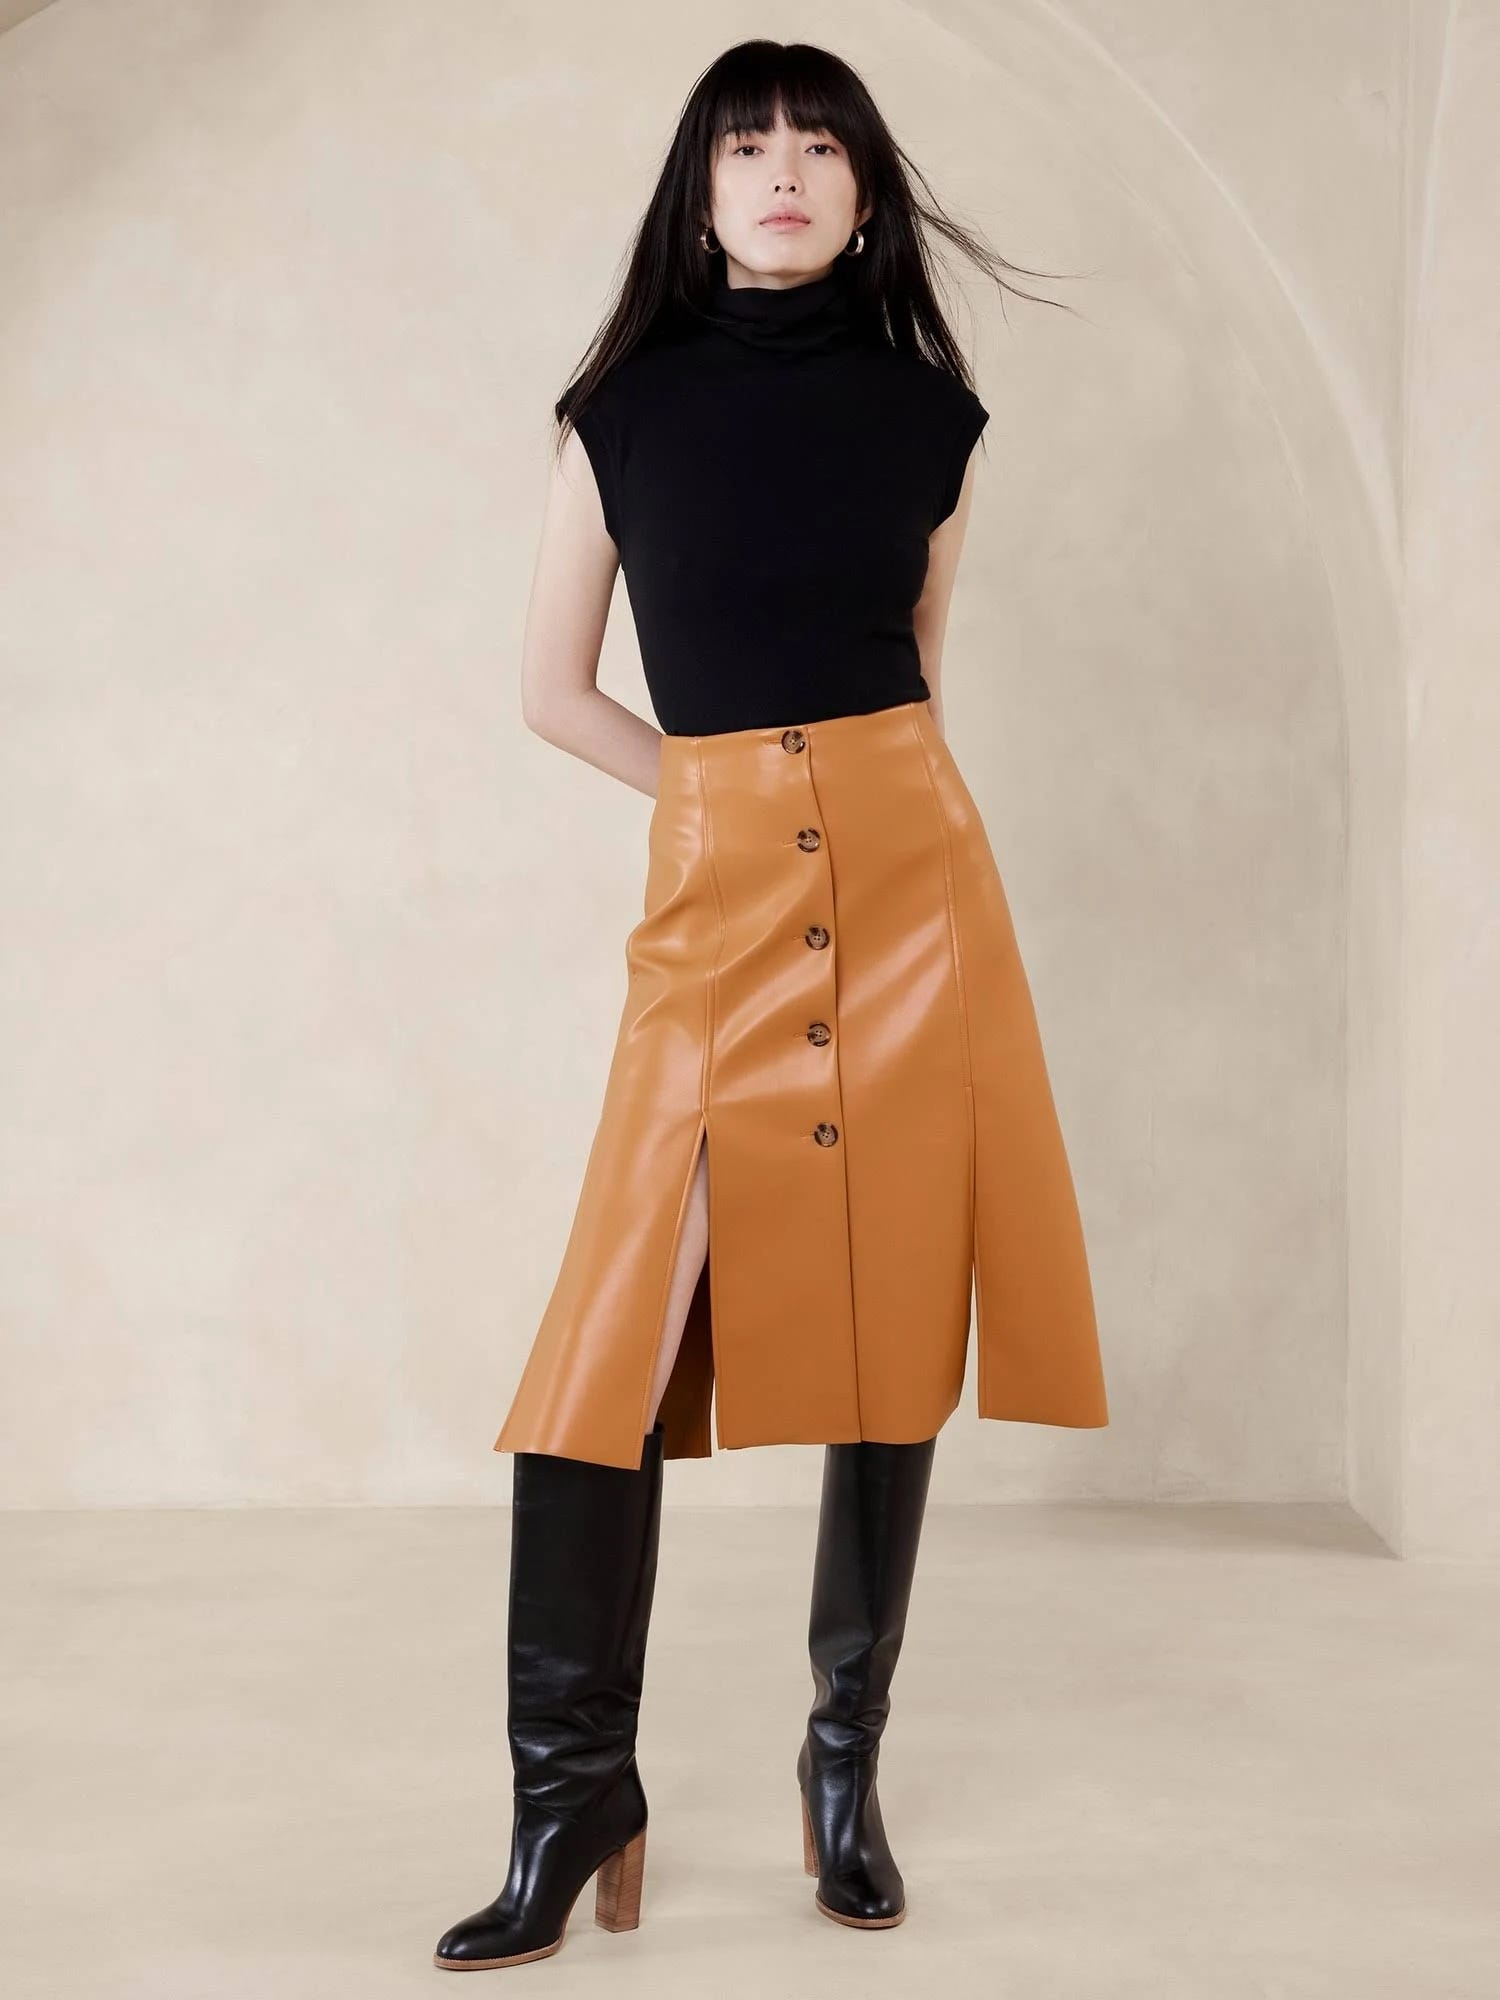 Tan Vegan Leather Midi Skirt for Women: Stylish and Comfortable | Image